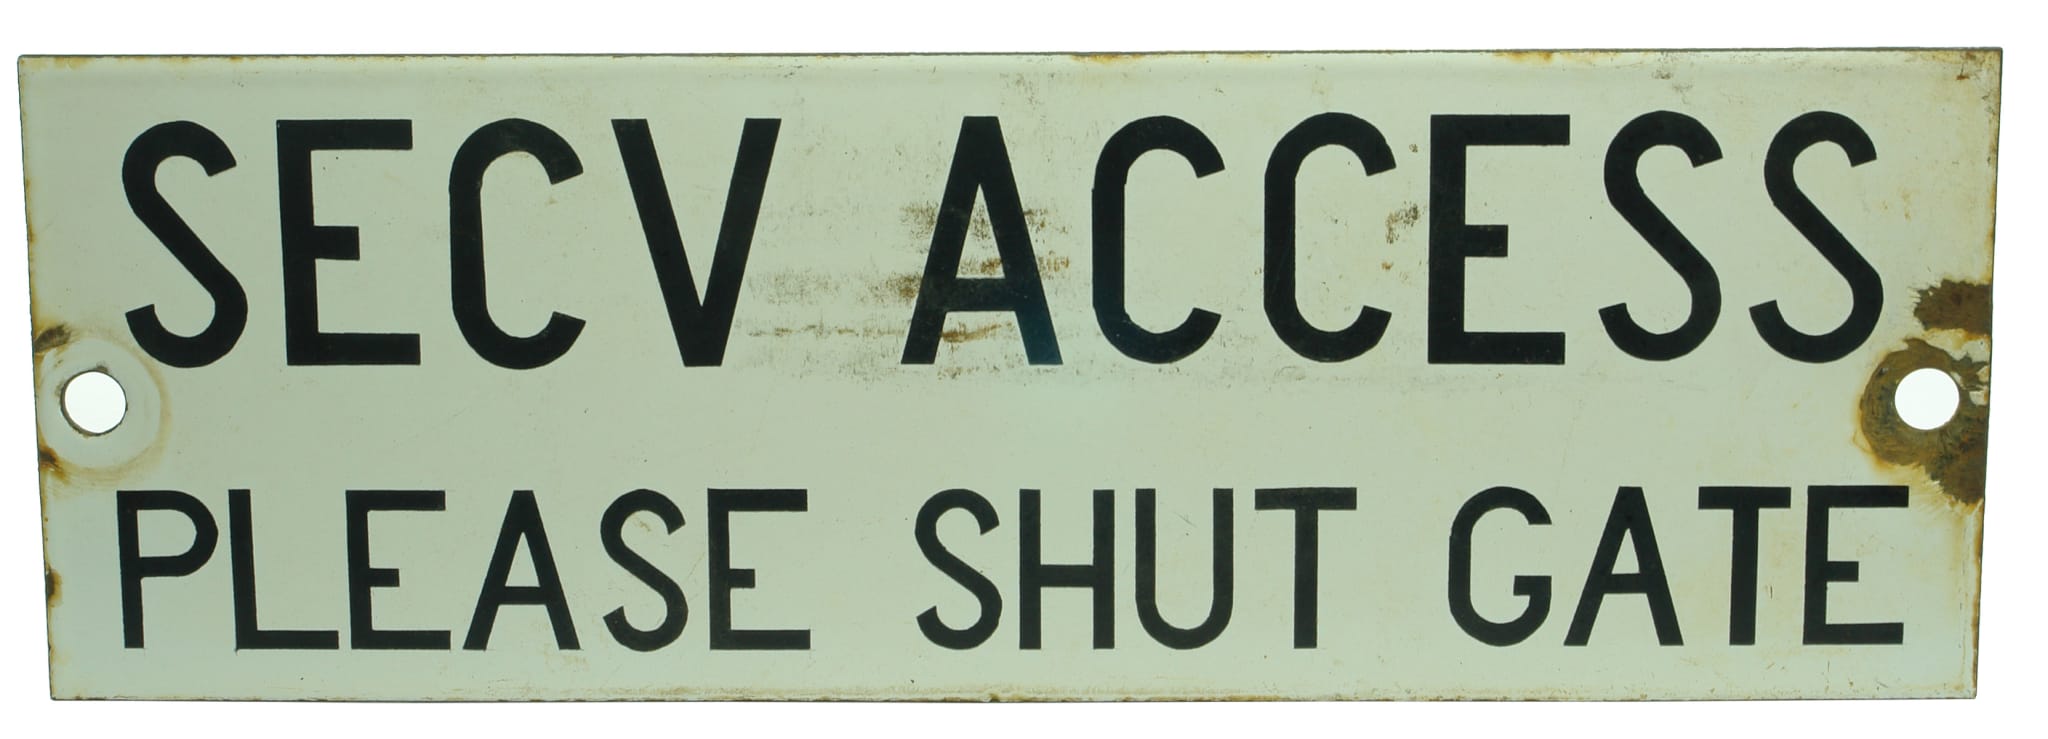 SECV Access Please Shut Gate Enamel Sign